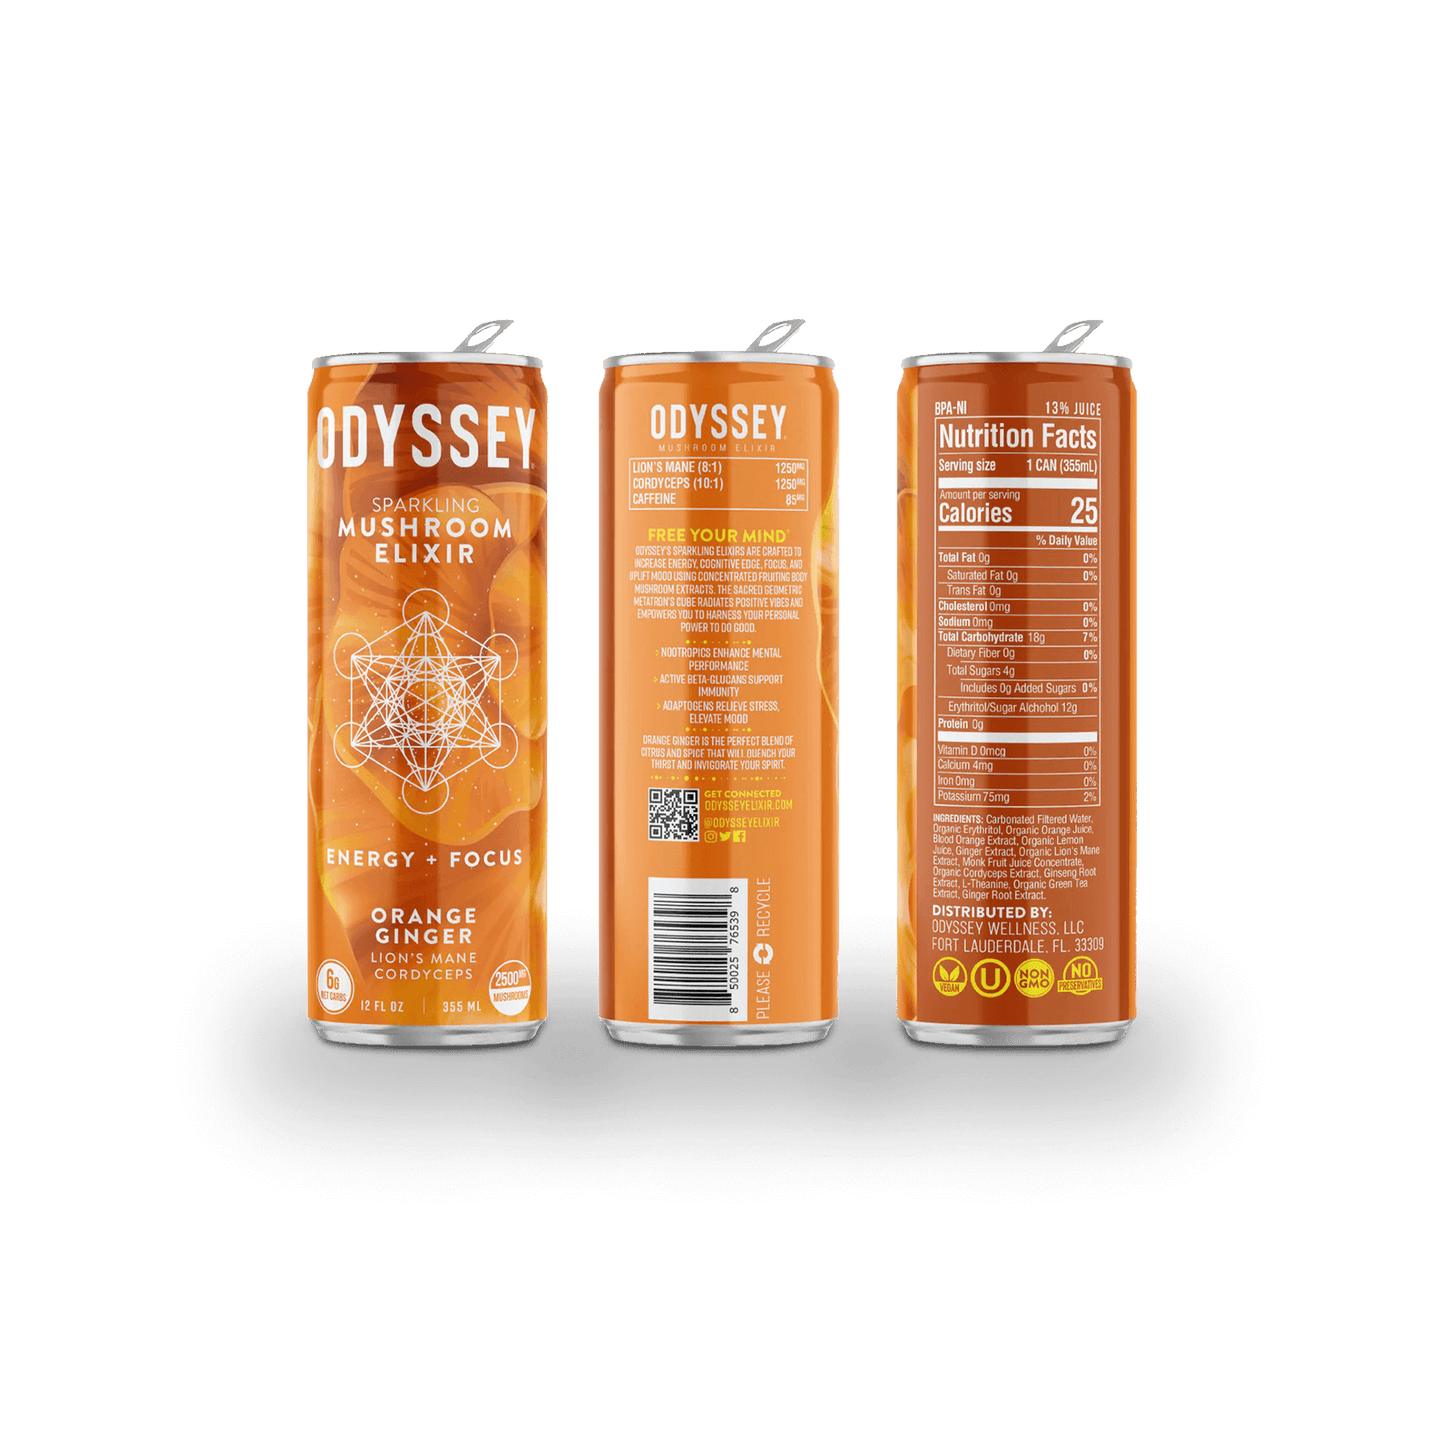 Odyssey Mushroom Elixir | Energy & Focus - Orange Ginger Back Label